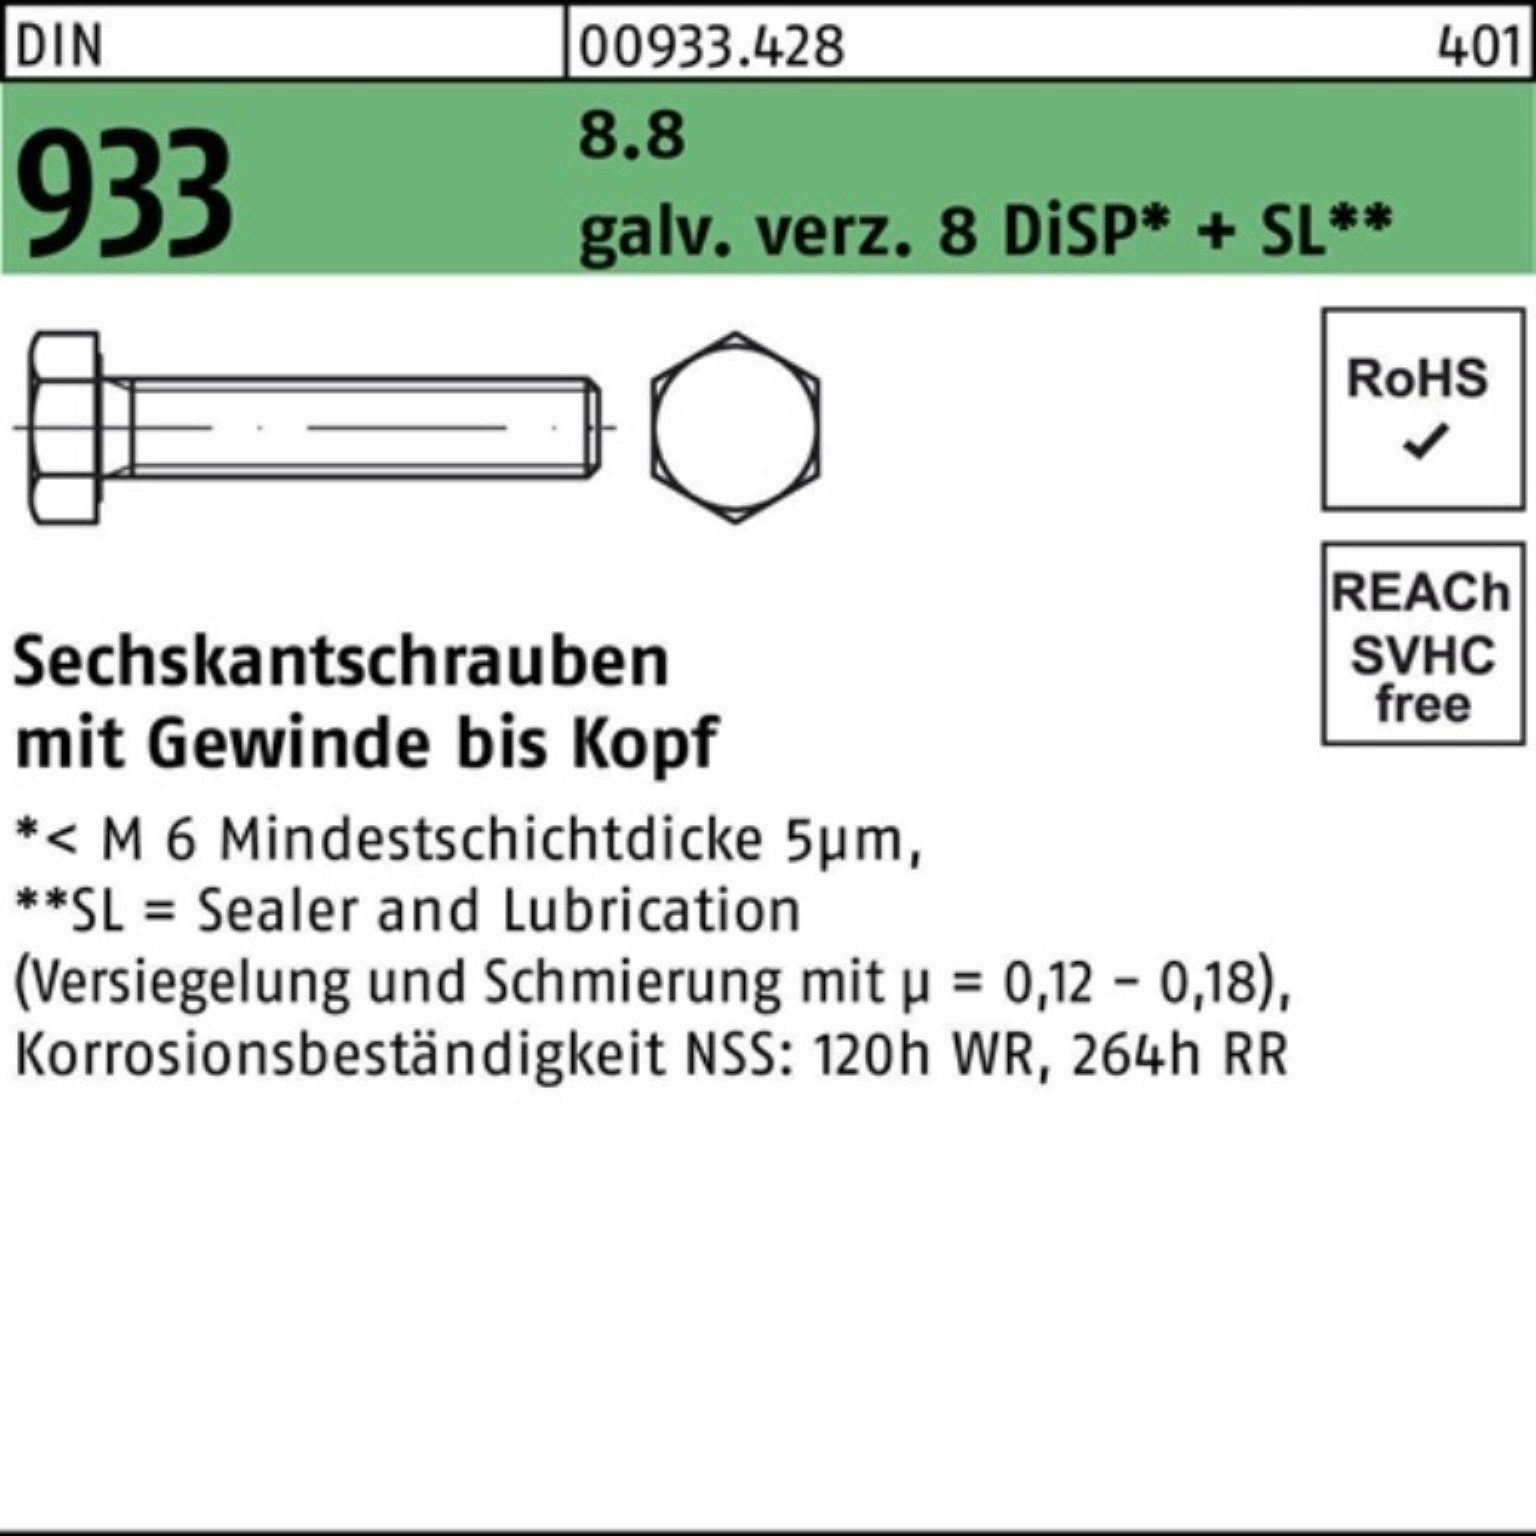 Reyher Sechskantschraube 100er Pack Sechskantschraube DIN 933 VG M16x 85 8.8 gal Zn 8 DiSP + SL